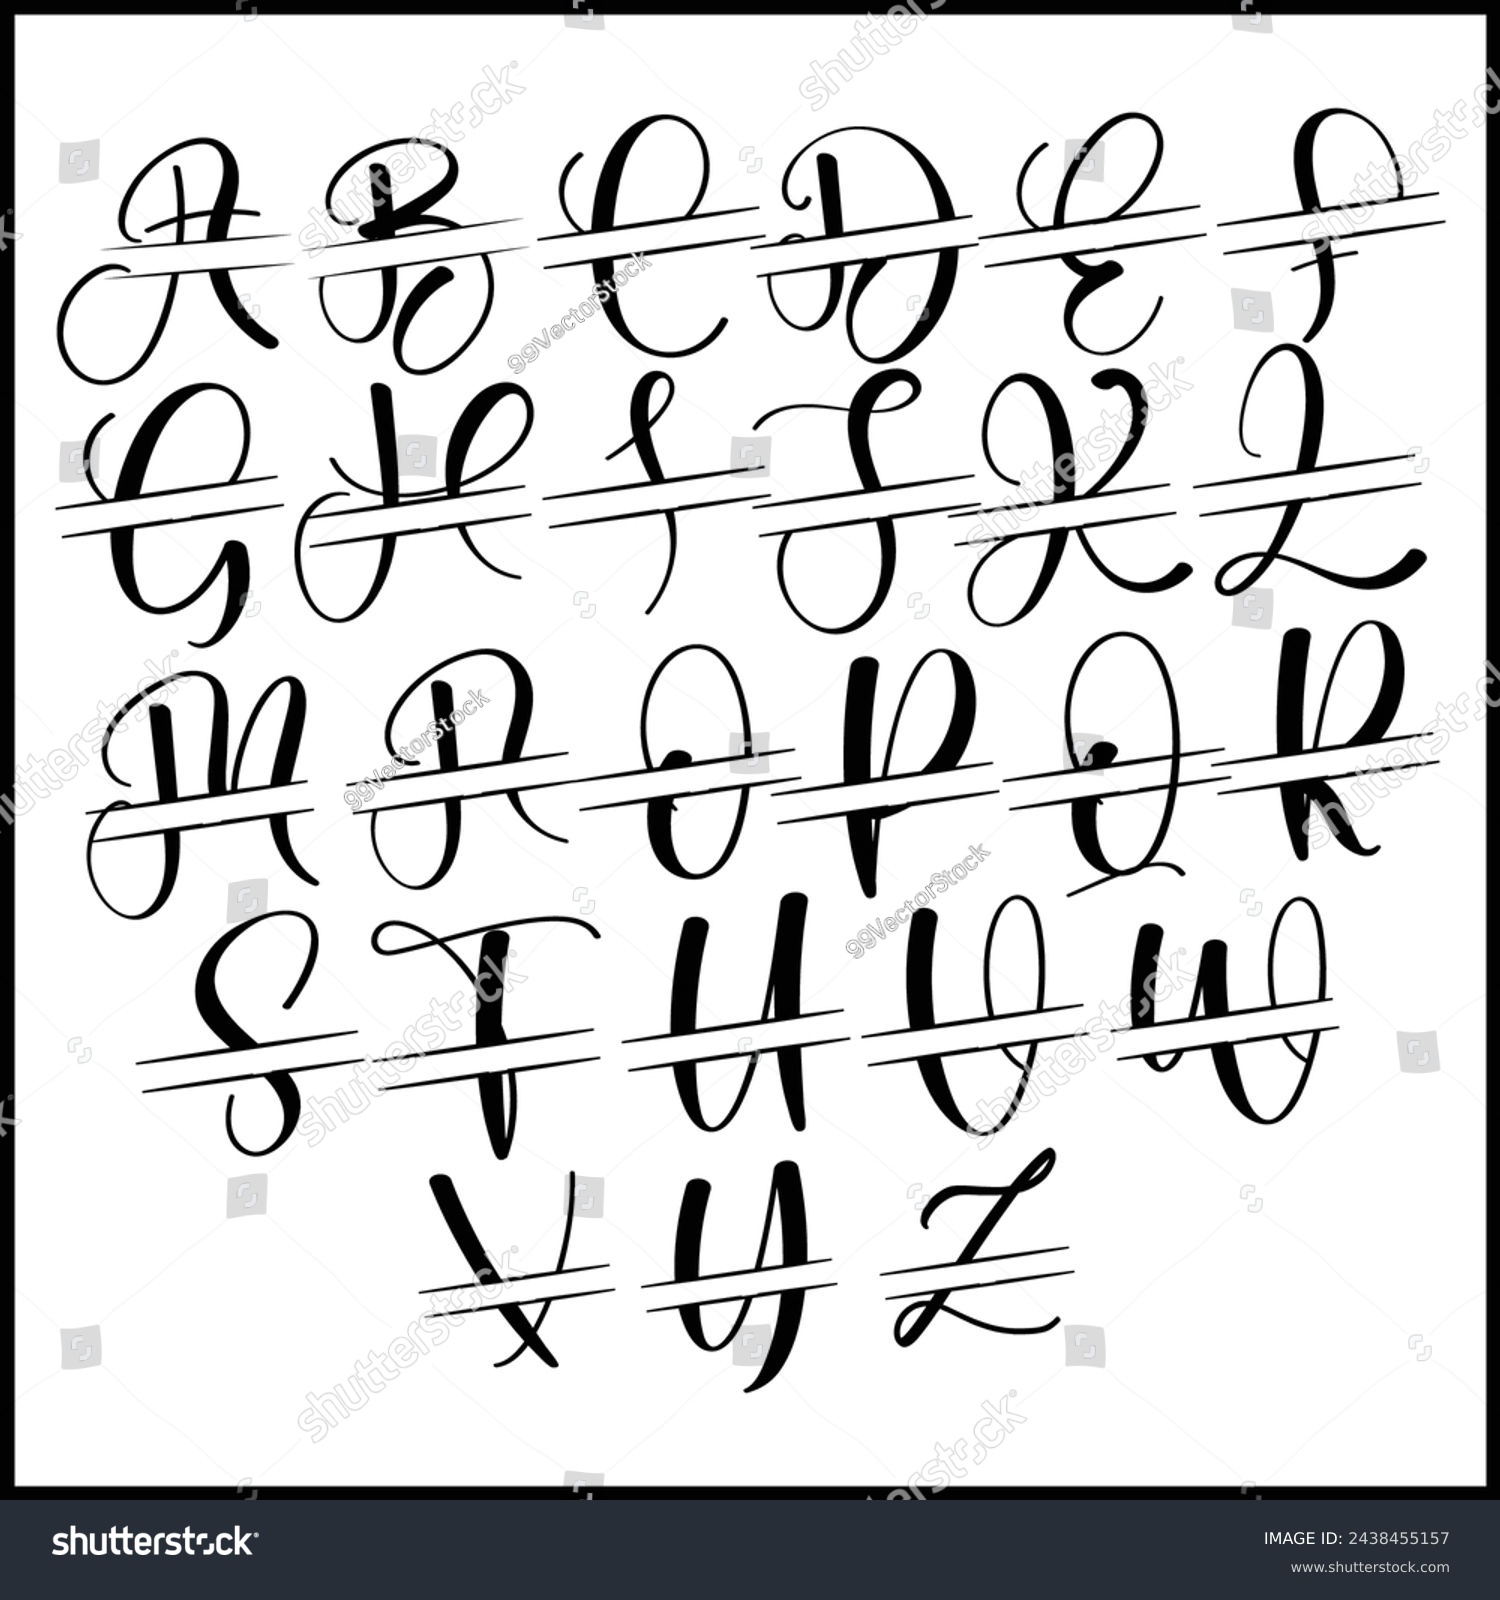 SVG of A to Z Silhouette Vector Alphabet Designs | Print Design svg